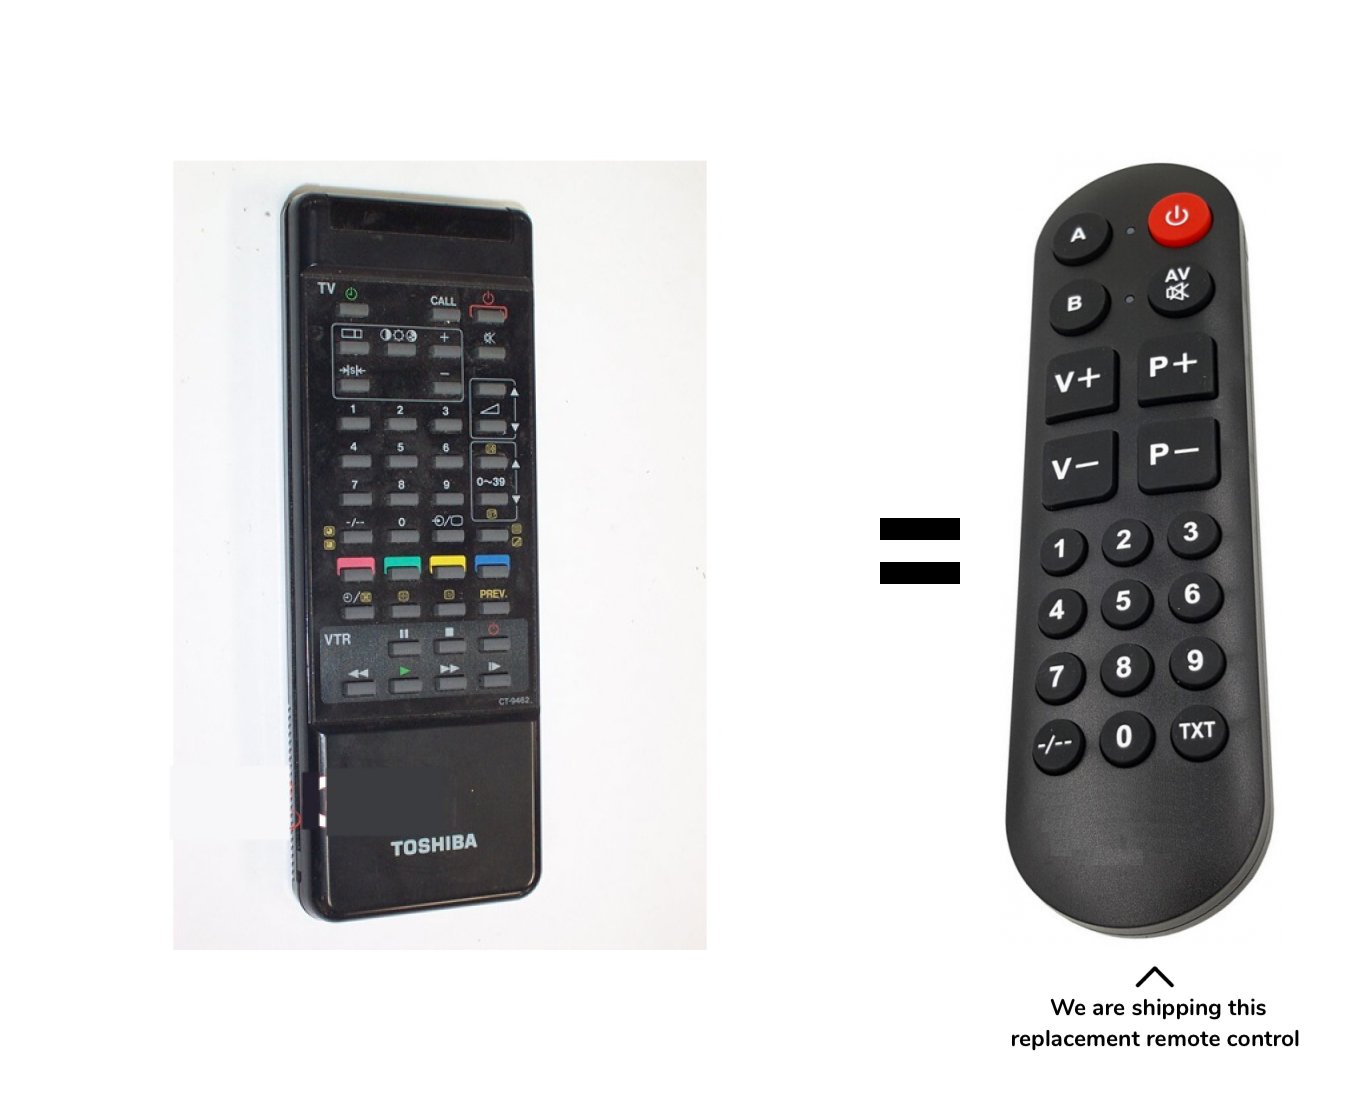 Toshiba 2102TBT remote control for seniors